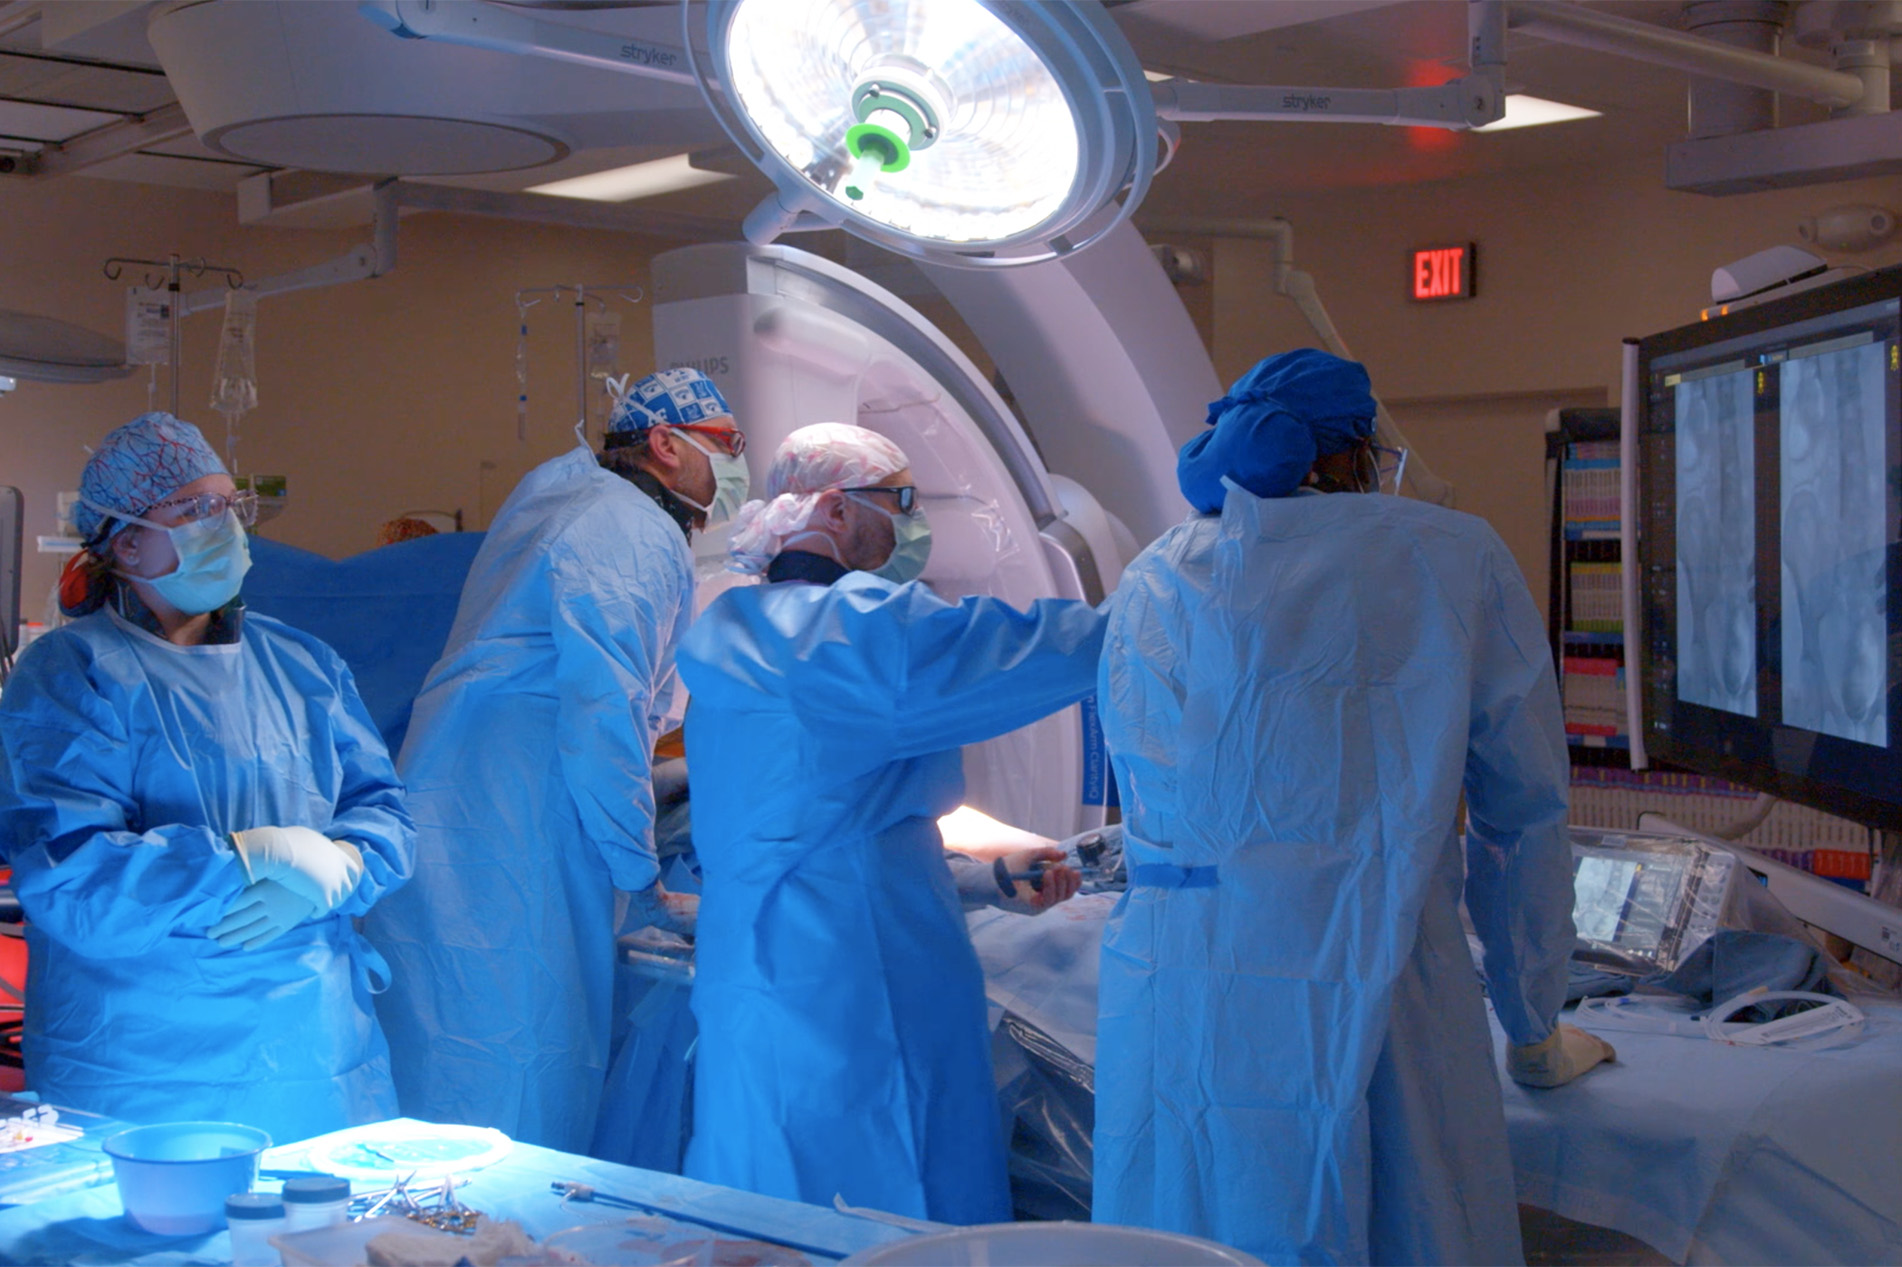 Vascular surgeons in operating room